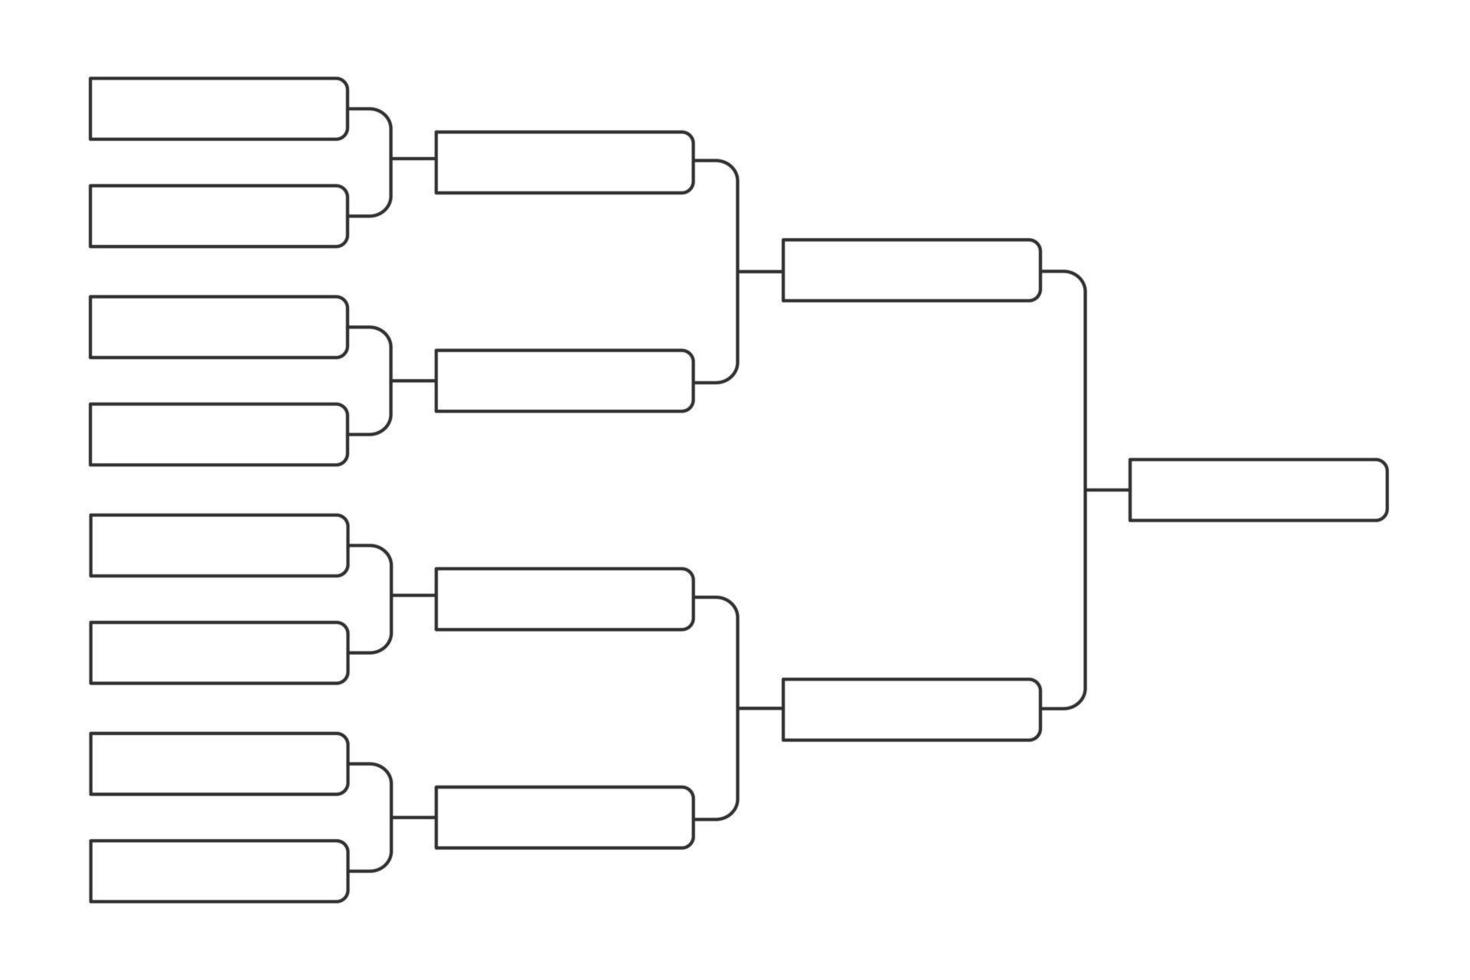 8 team tournament bracket championship template flat style design vector illustration.